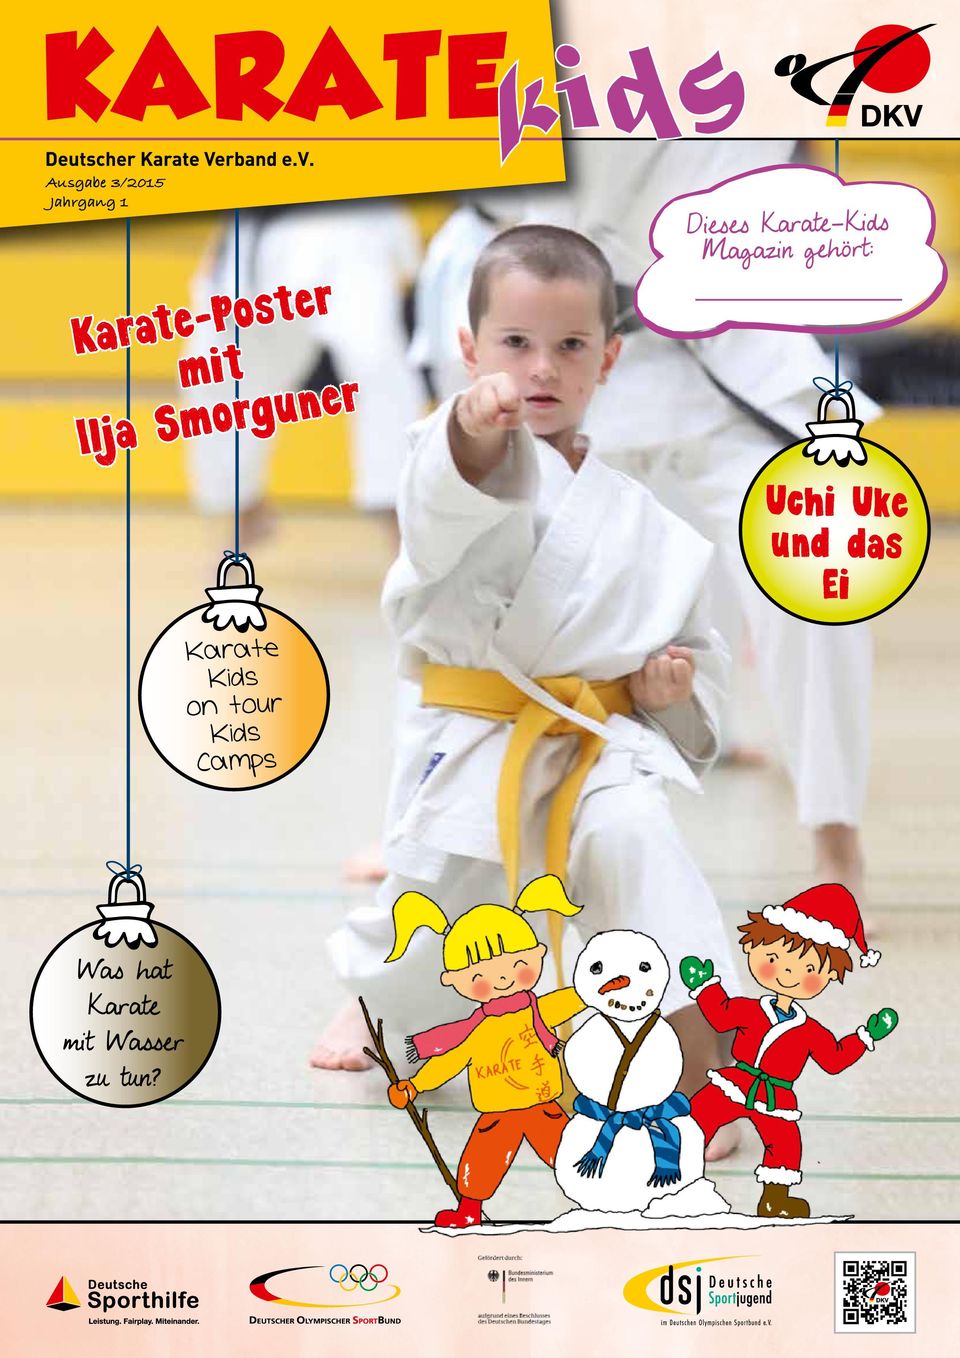 Sm Karate Kids on tour Kids Camps